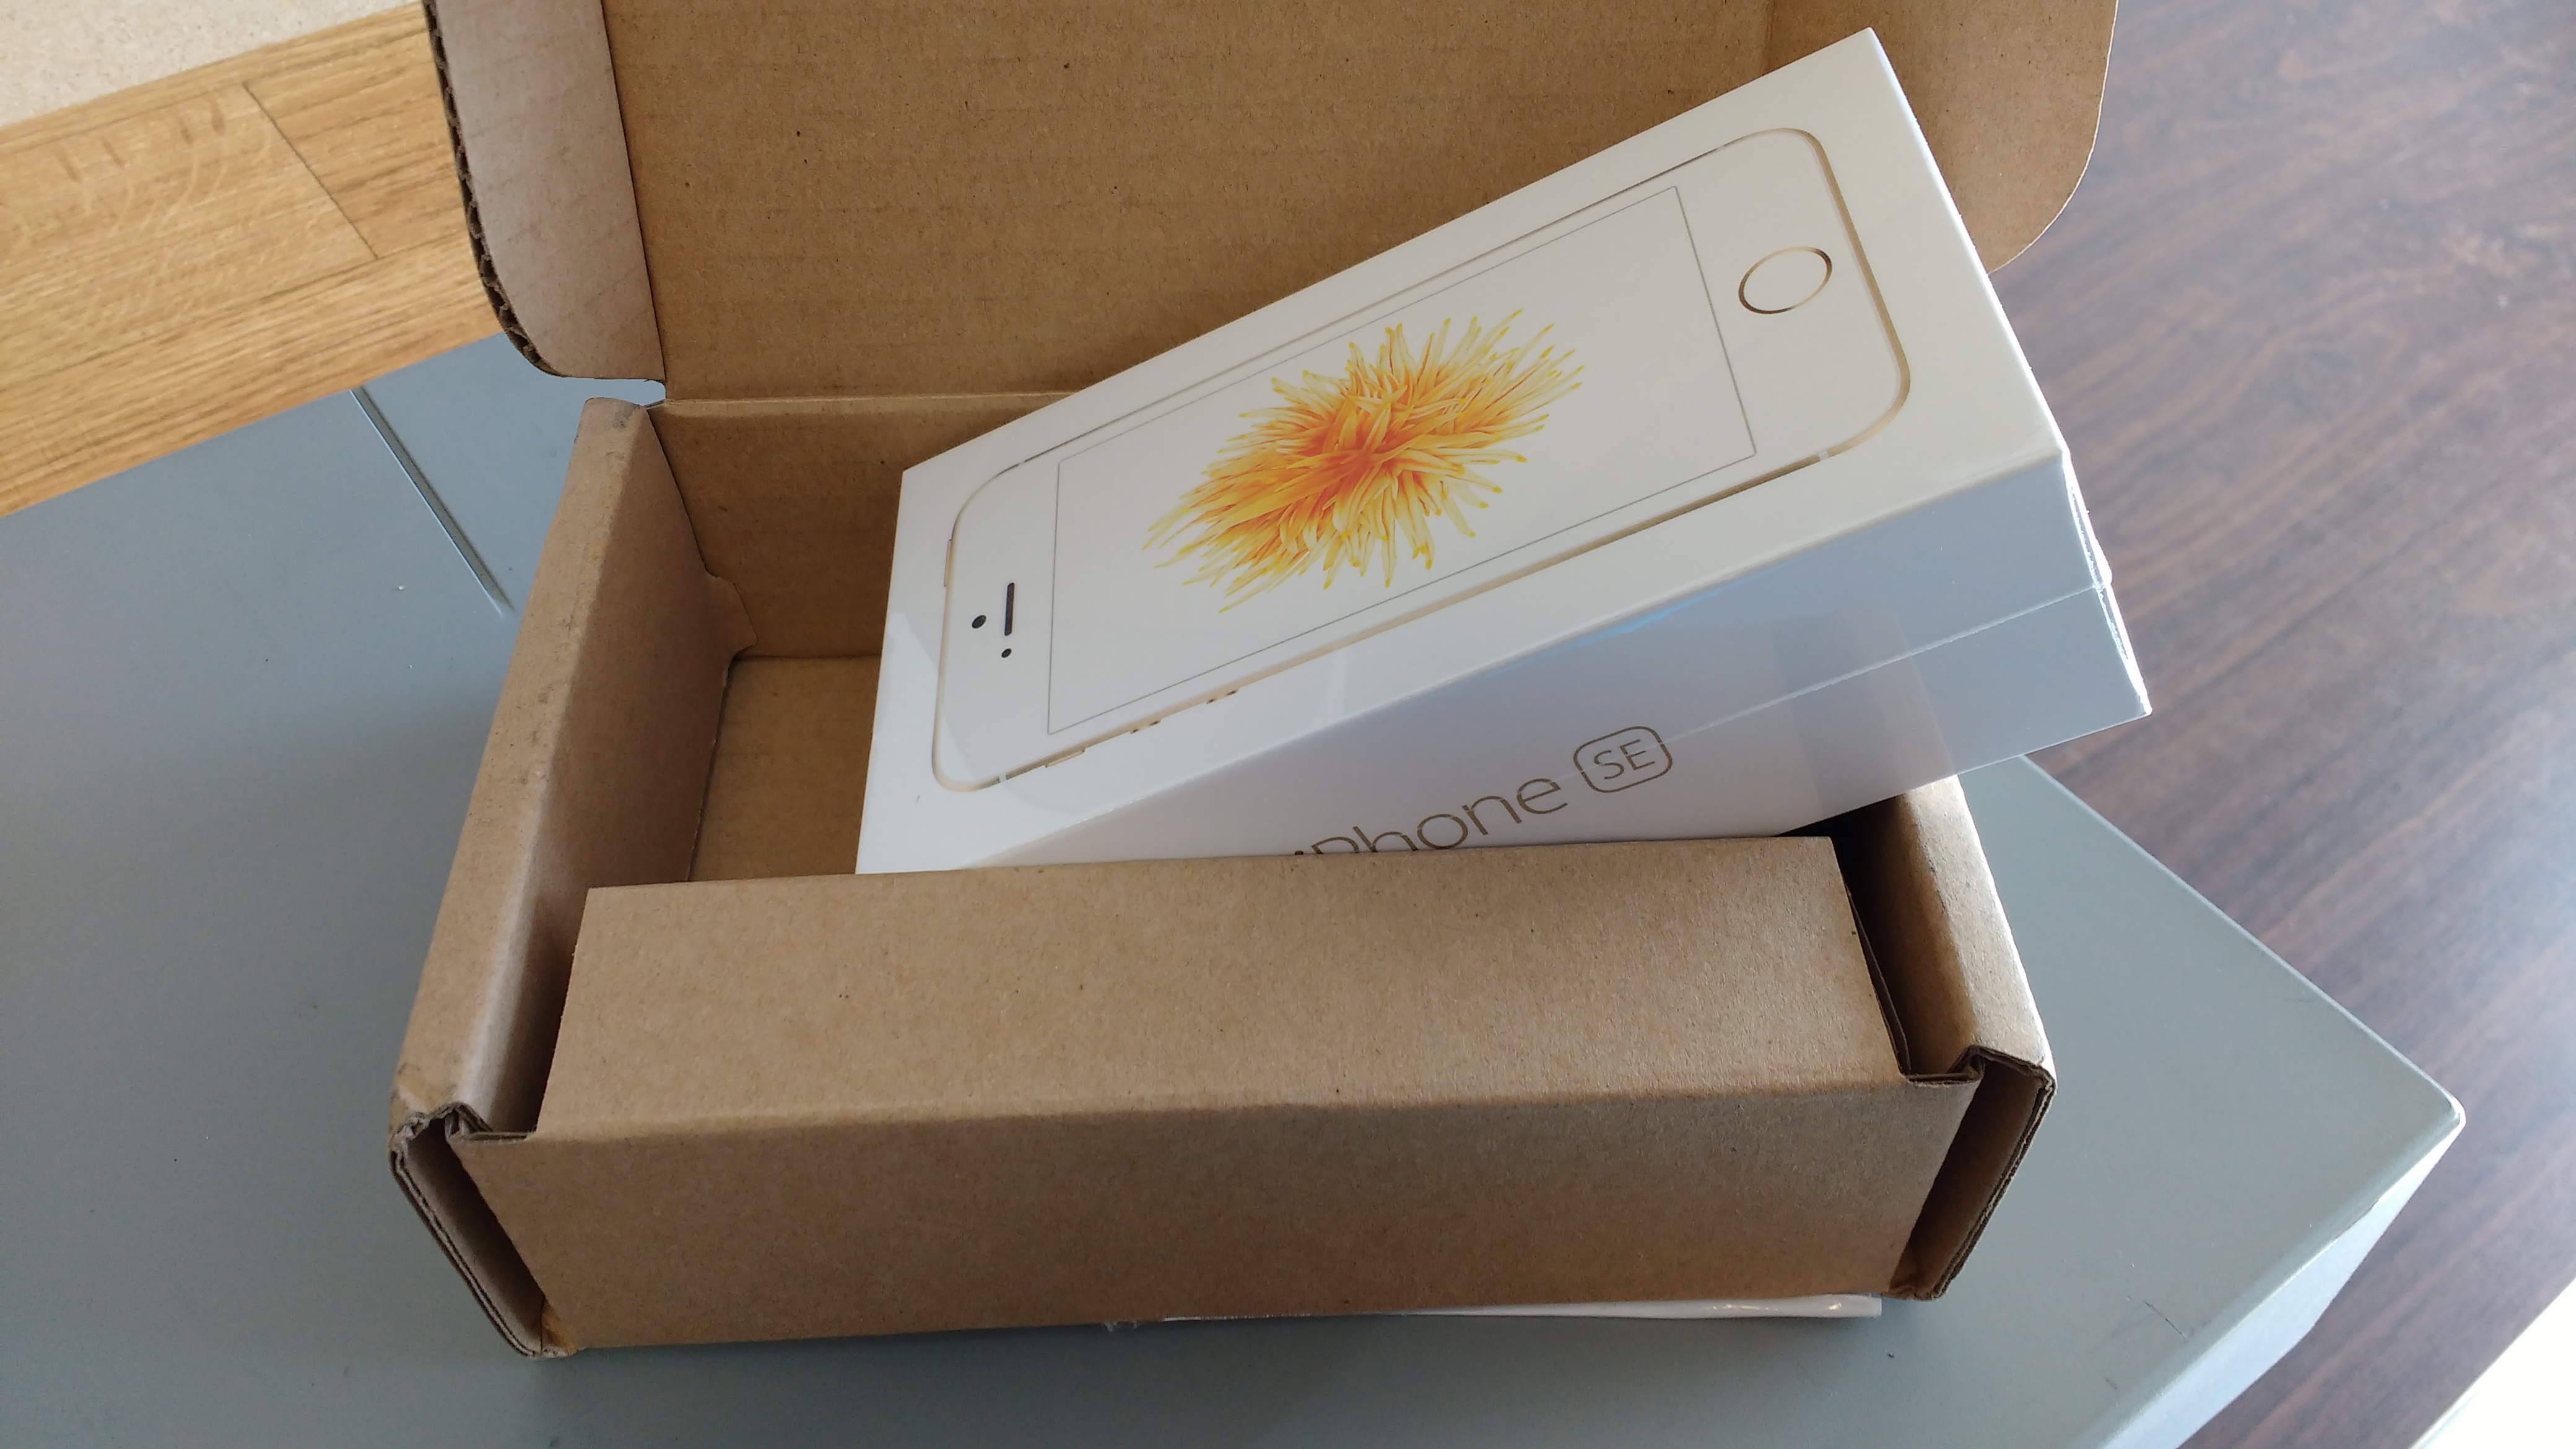 фото нового телефона в коробке